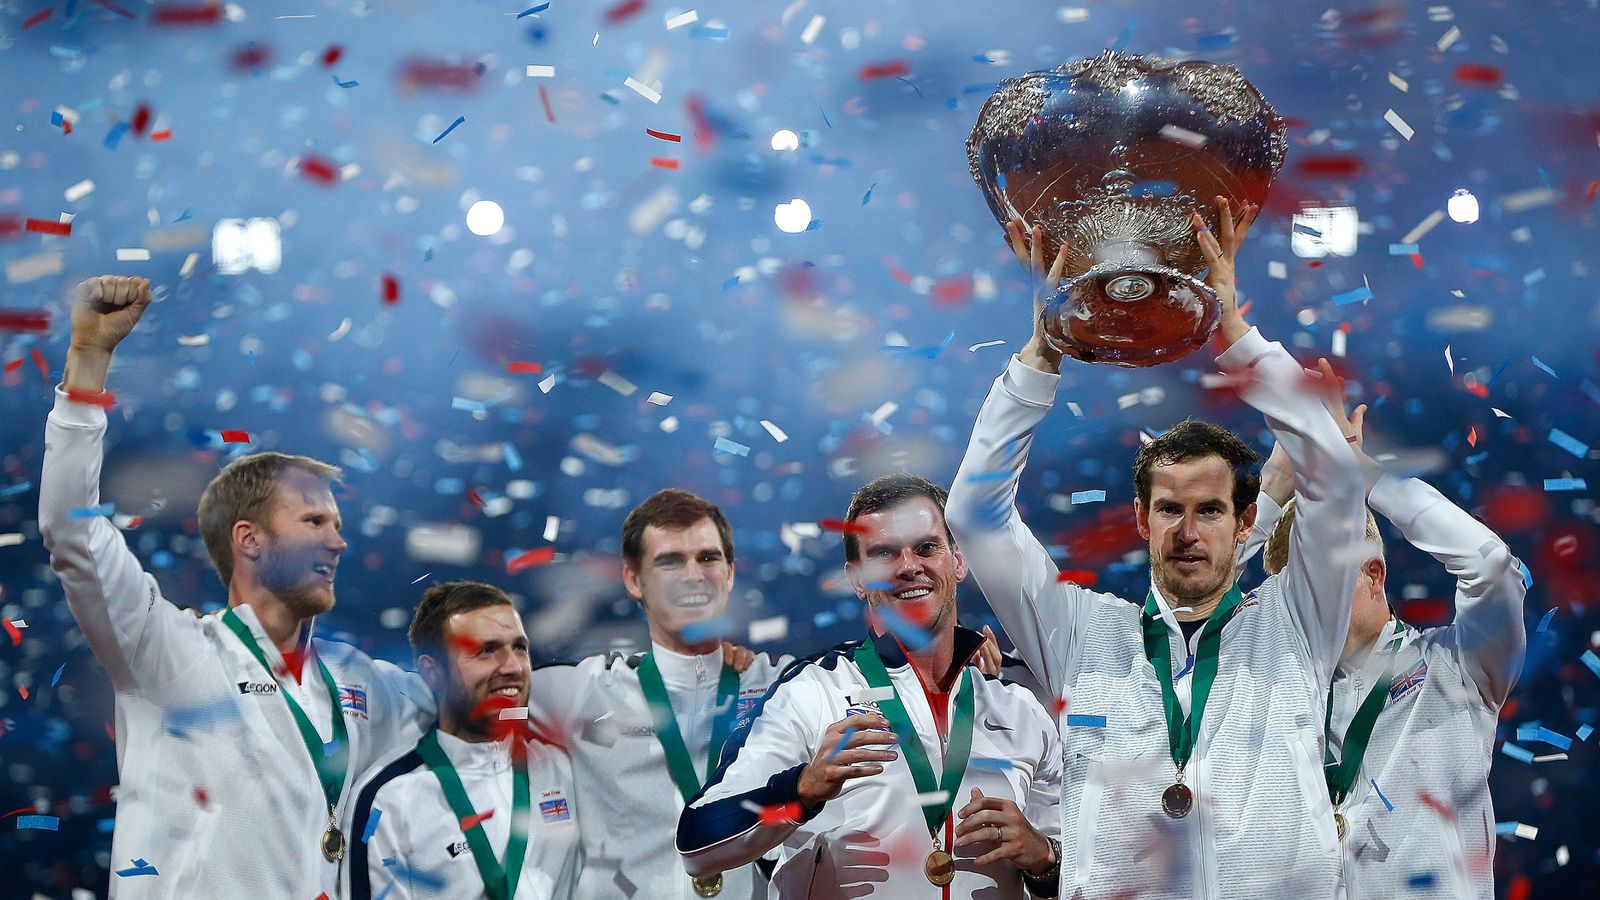 The LTA celebrates Great Britain's Davis Cup success in 2015 with ...